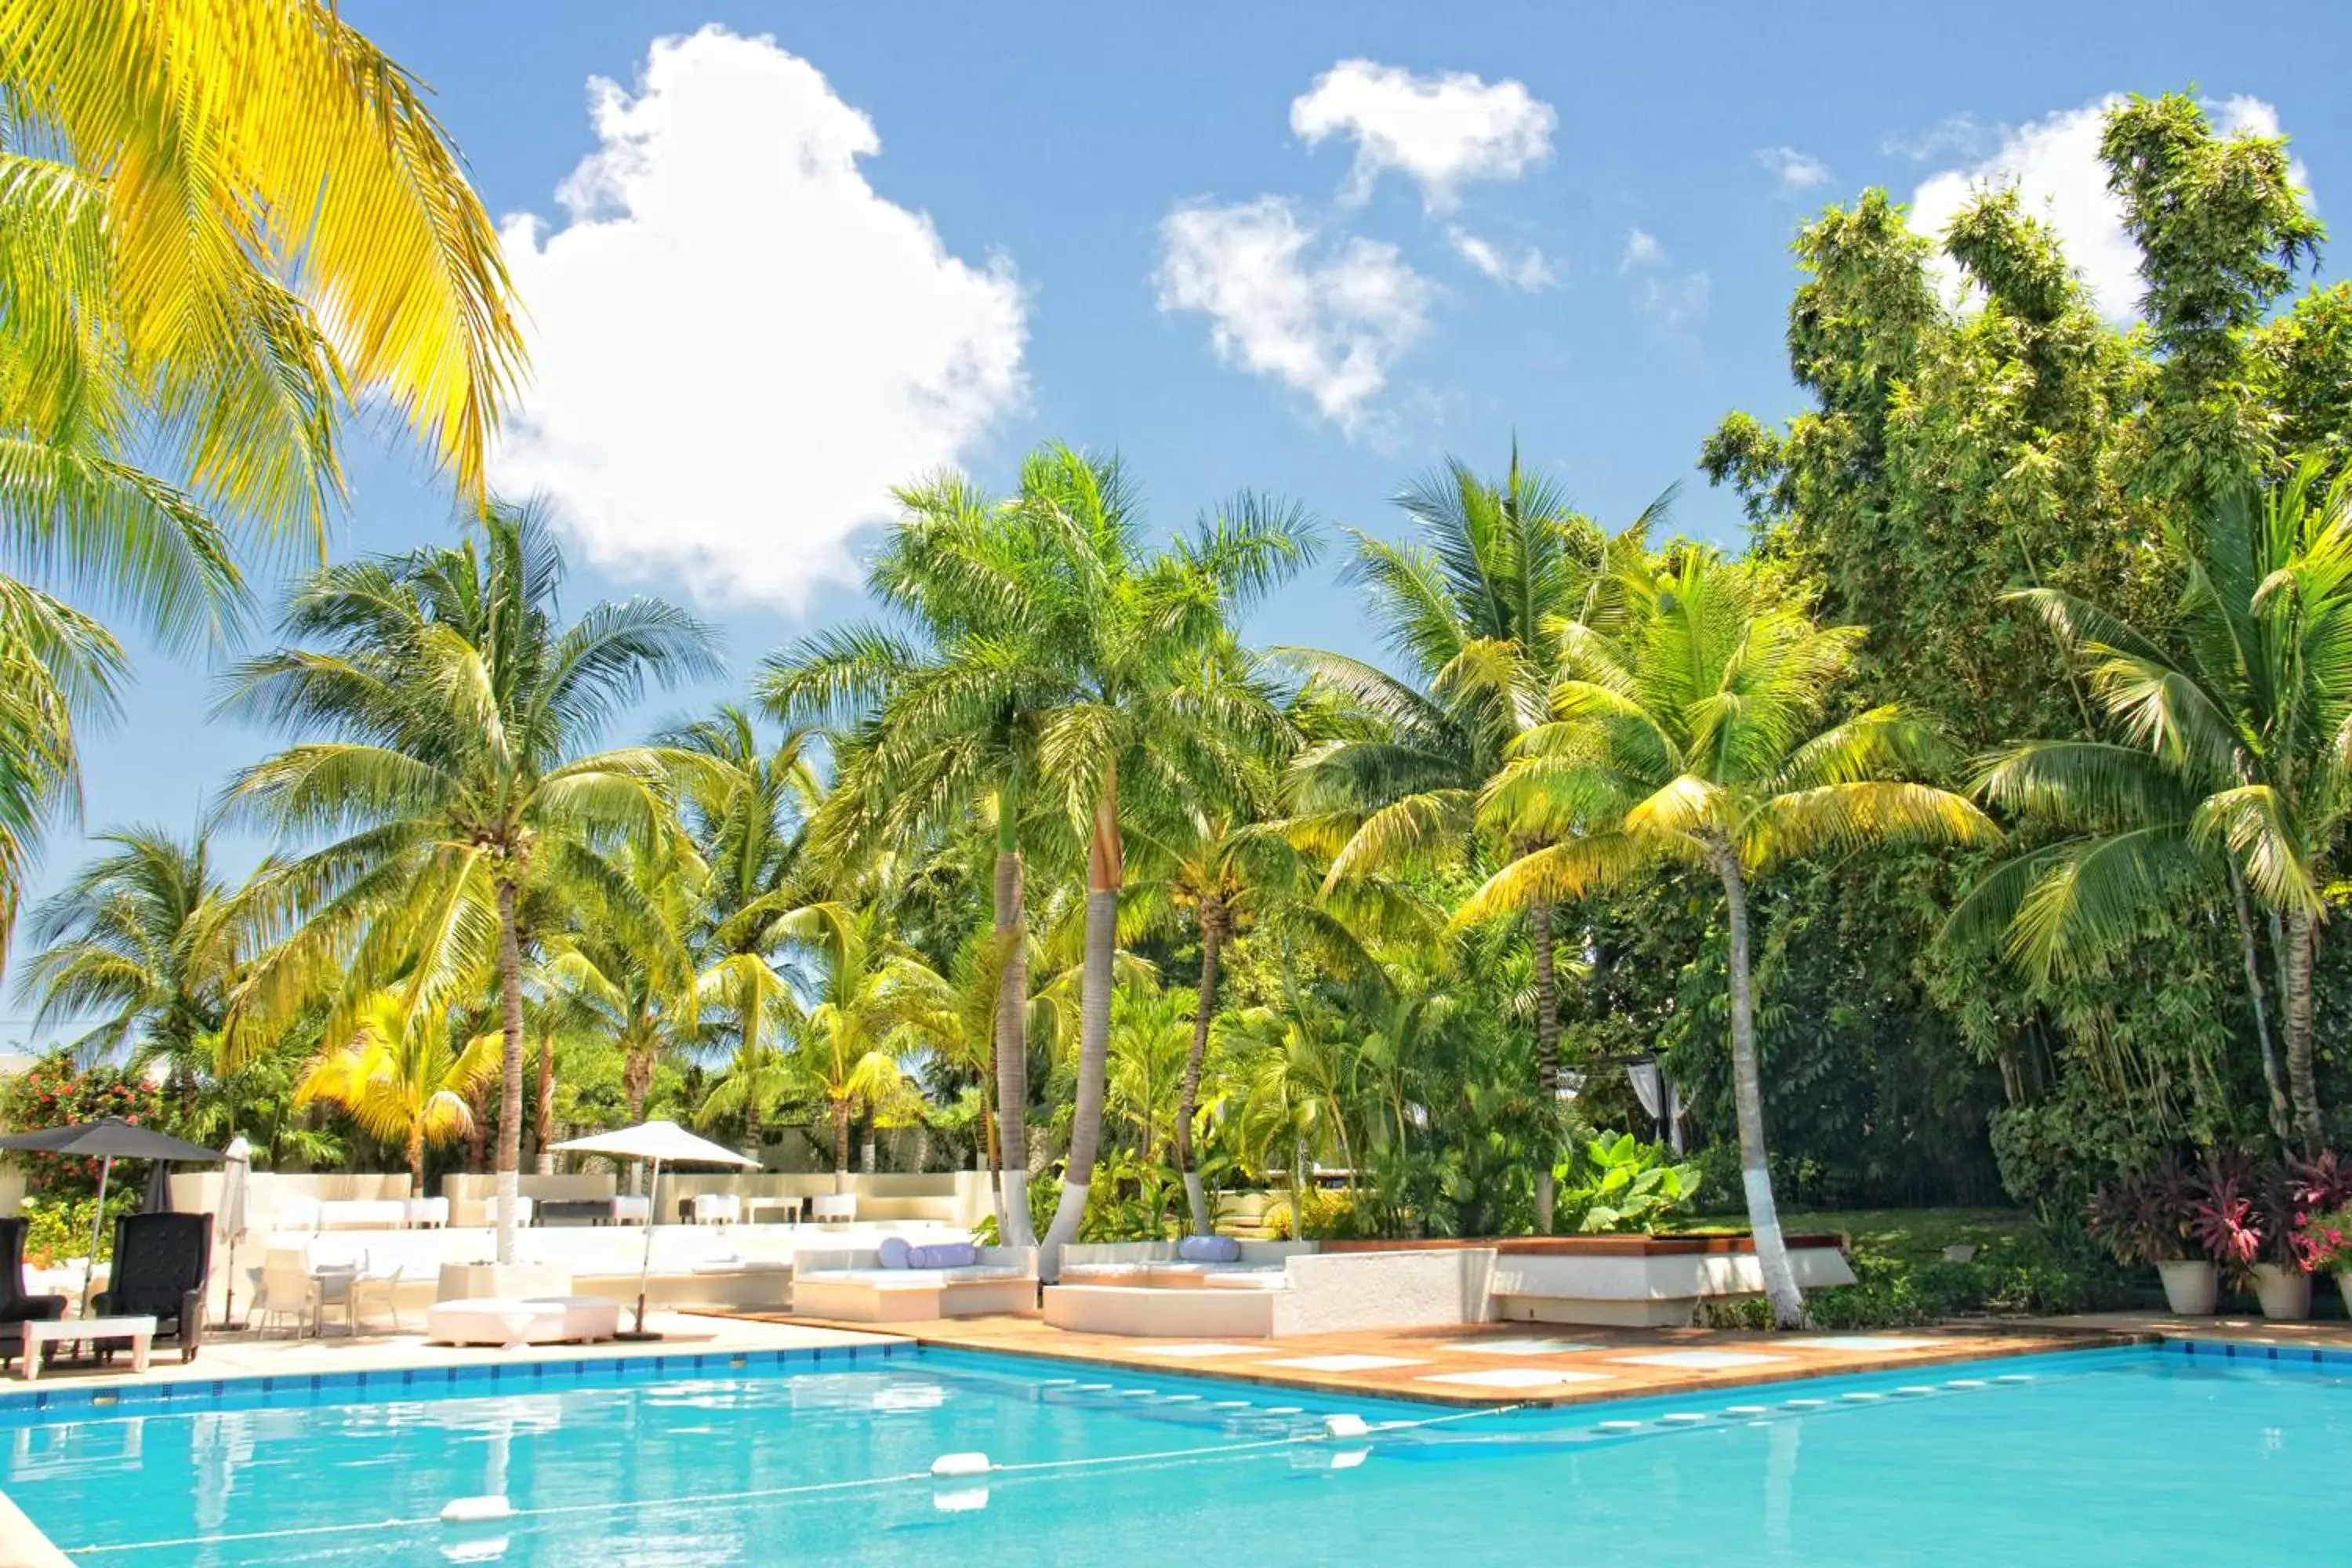 Swimming Pool in Oh! Cancun - The Urban Oasis